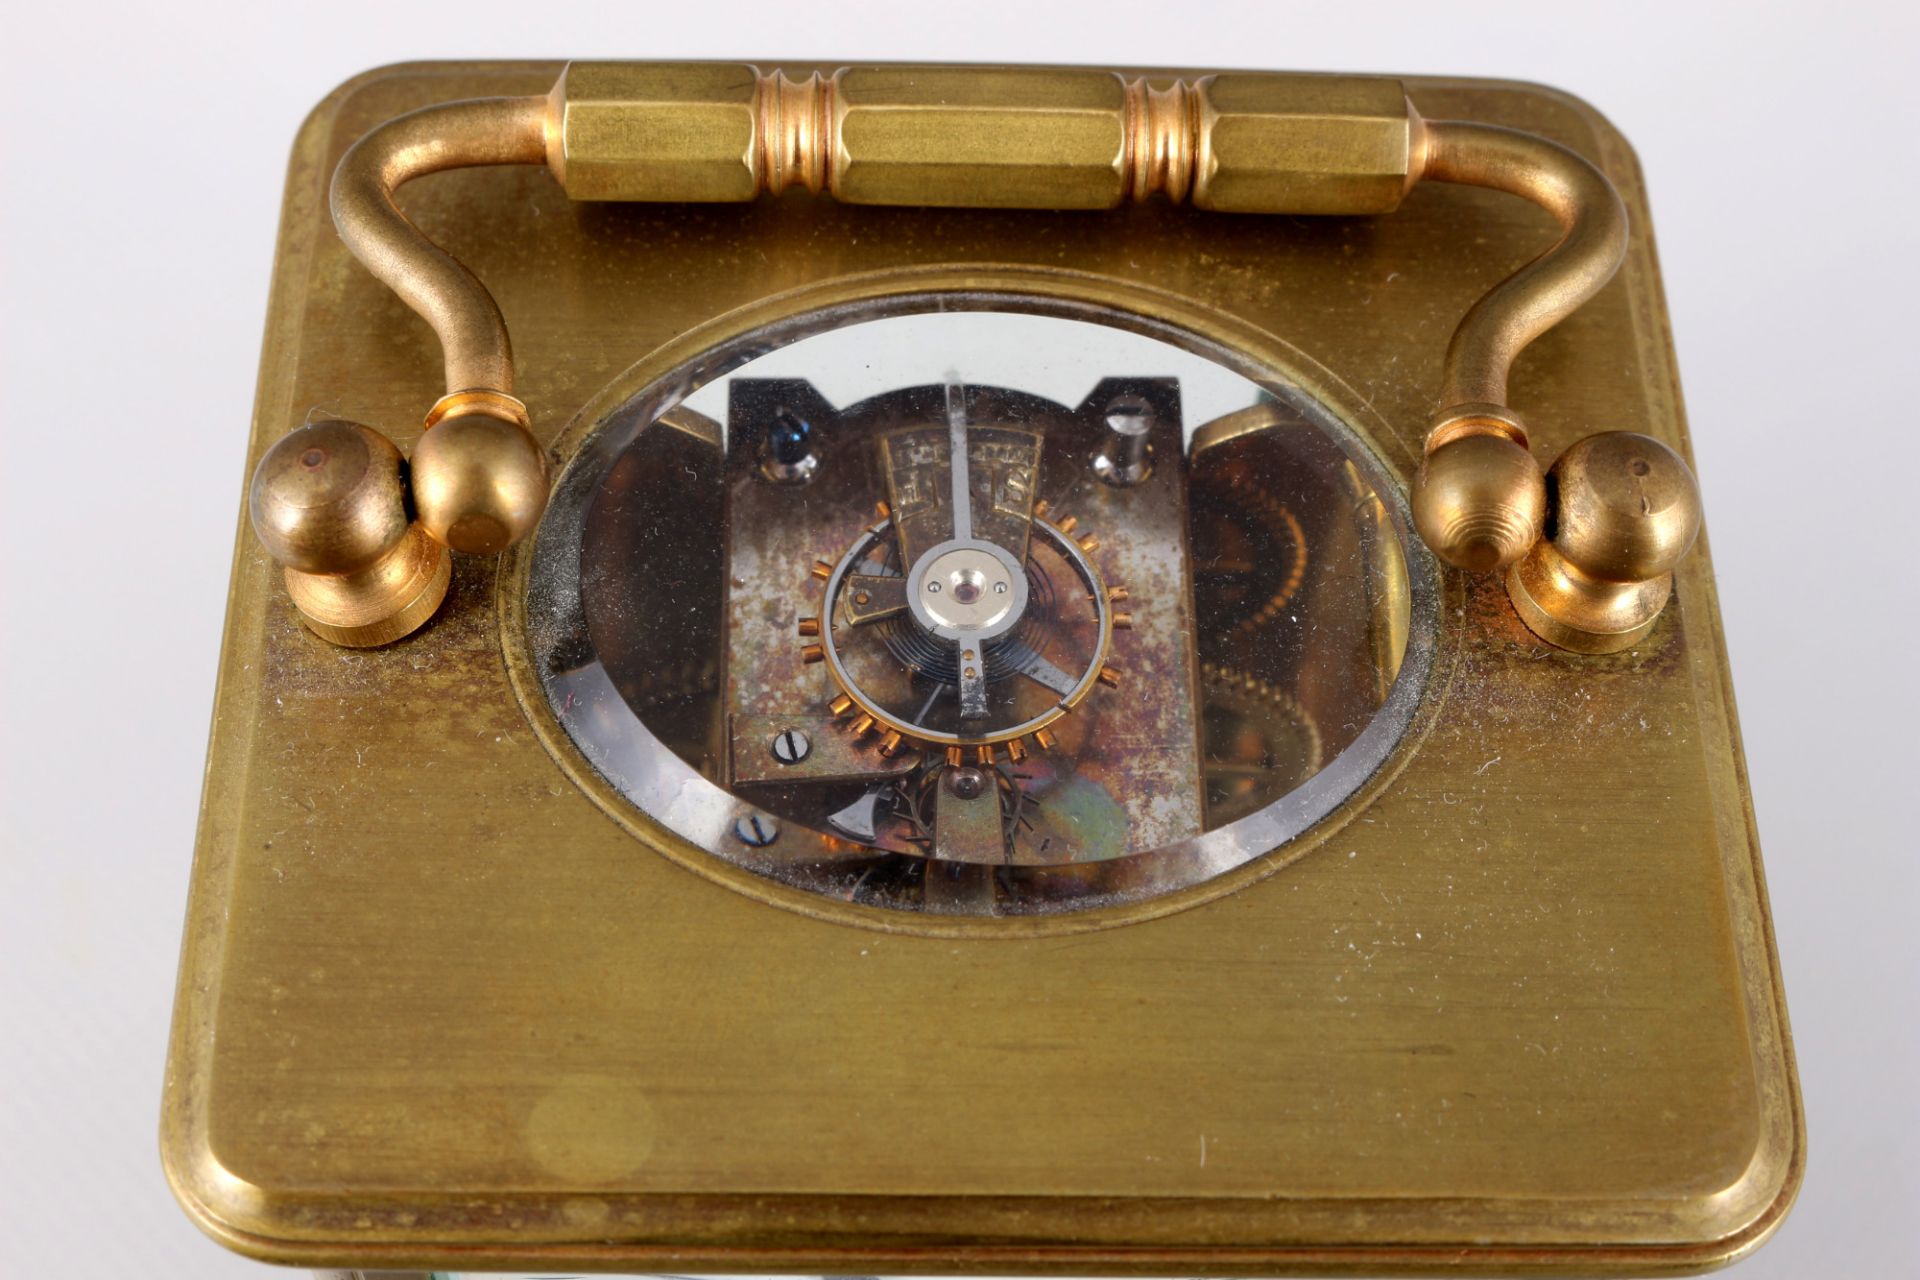 Carriage clock, England around 1900, Reiseuhr, - Image 7 of 7